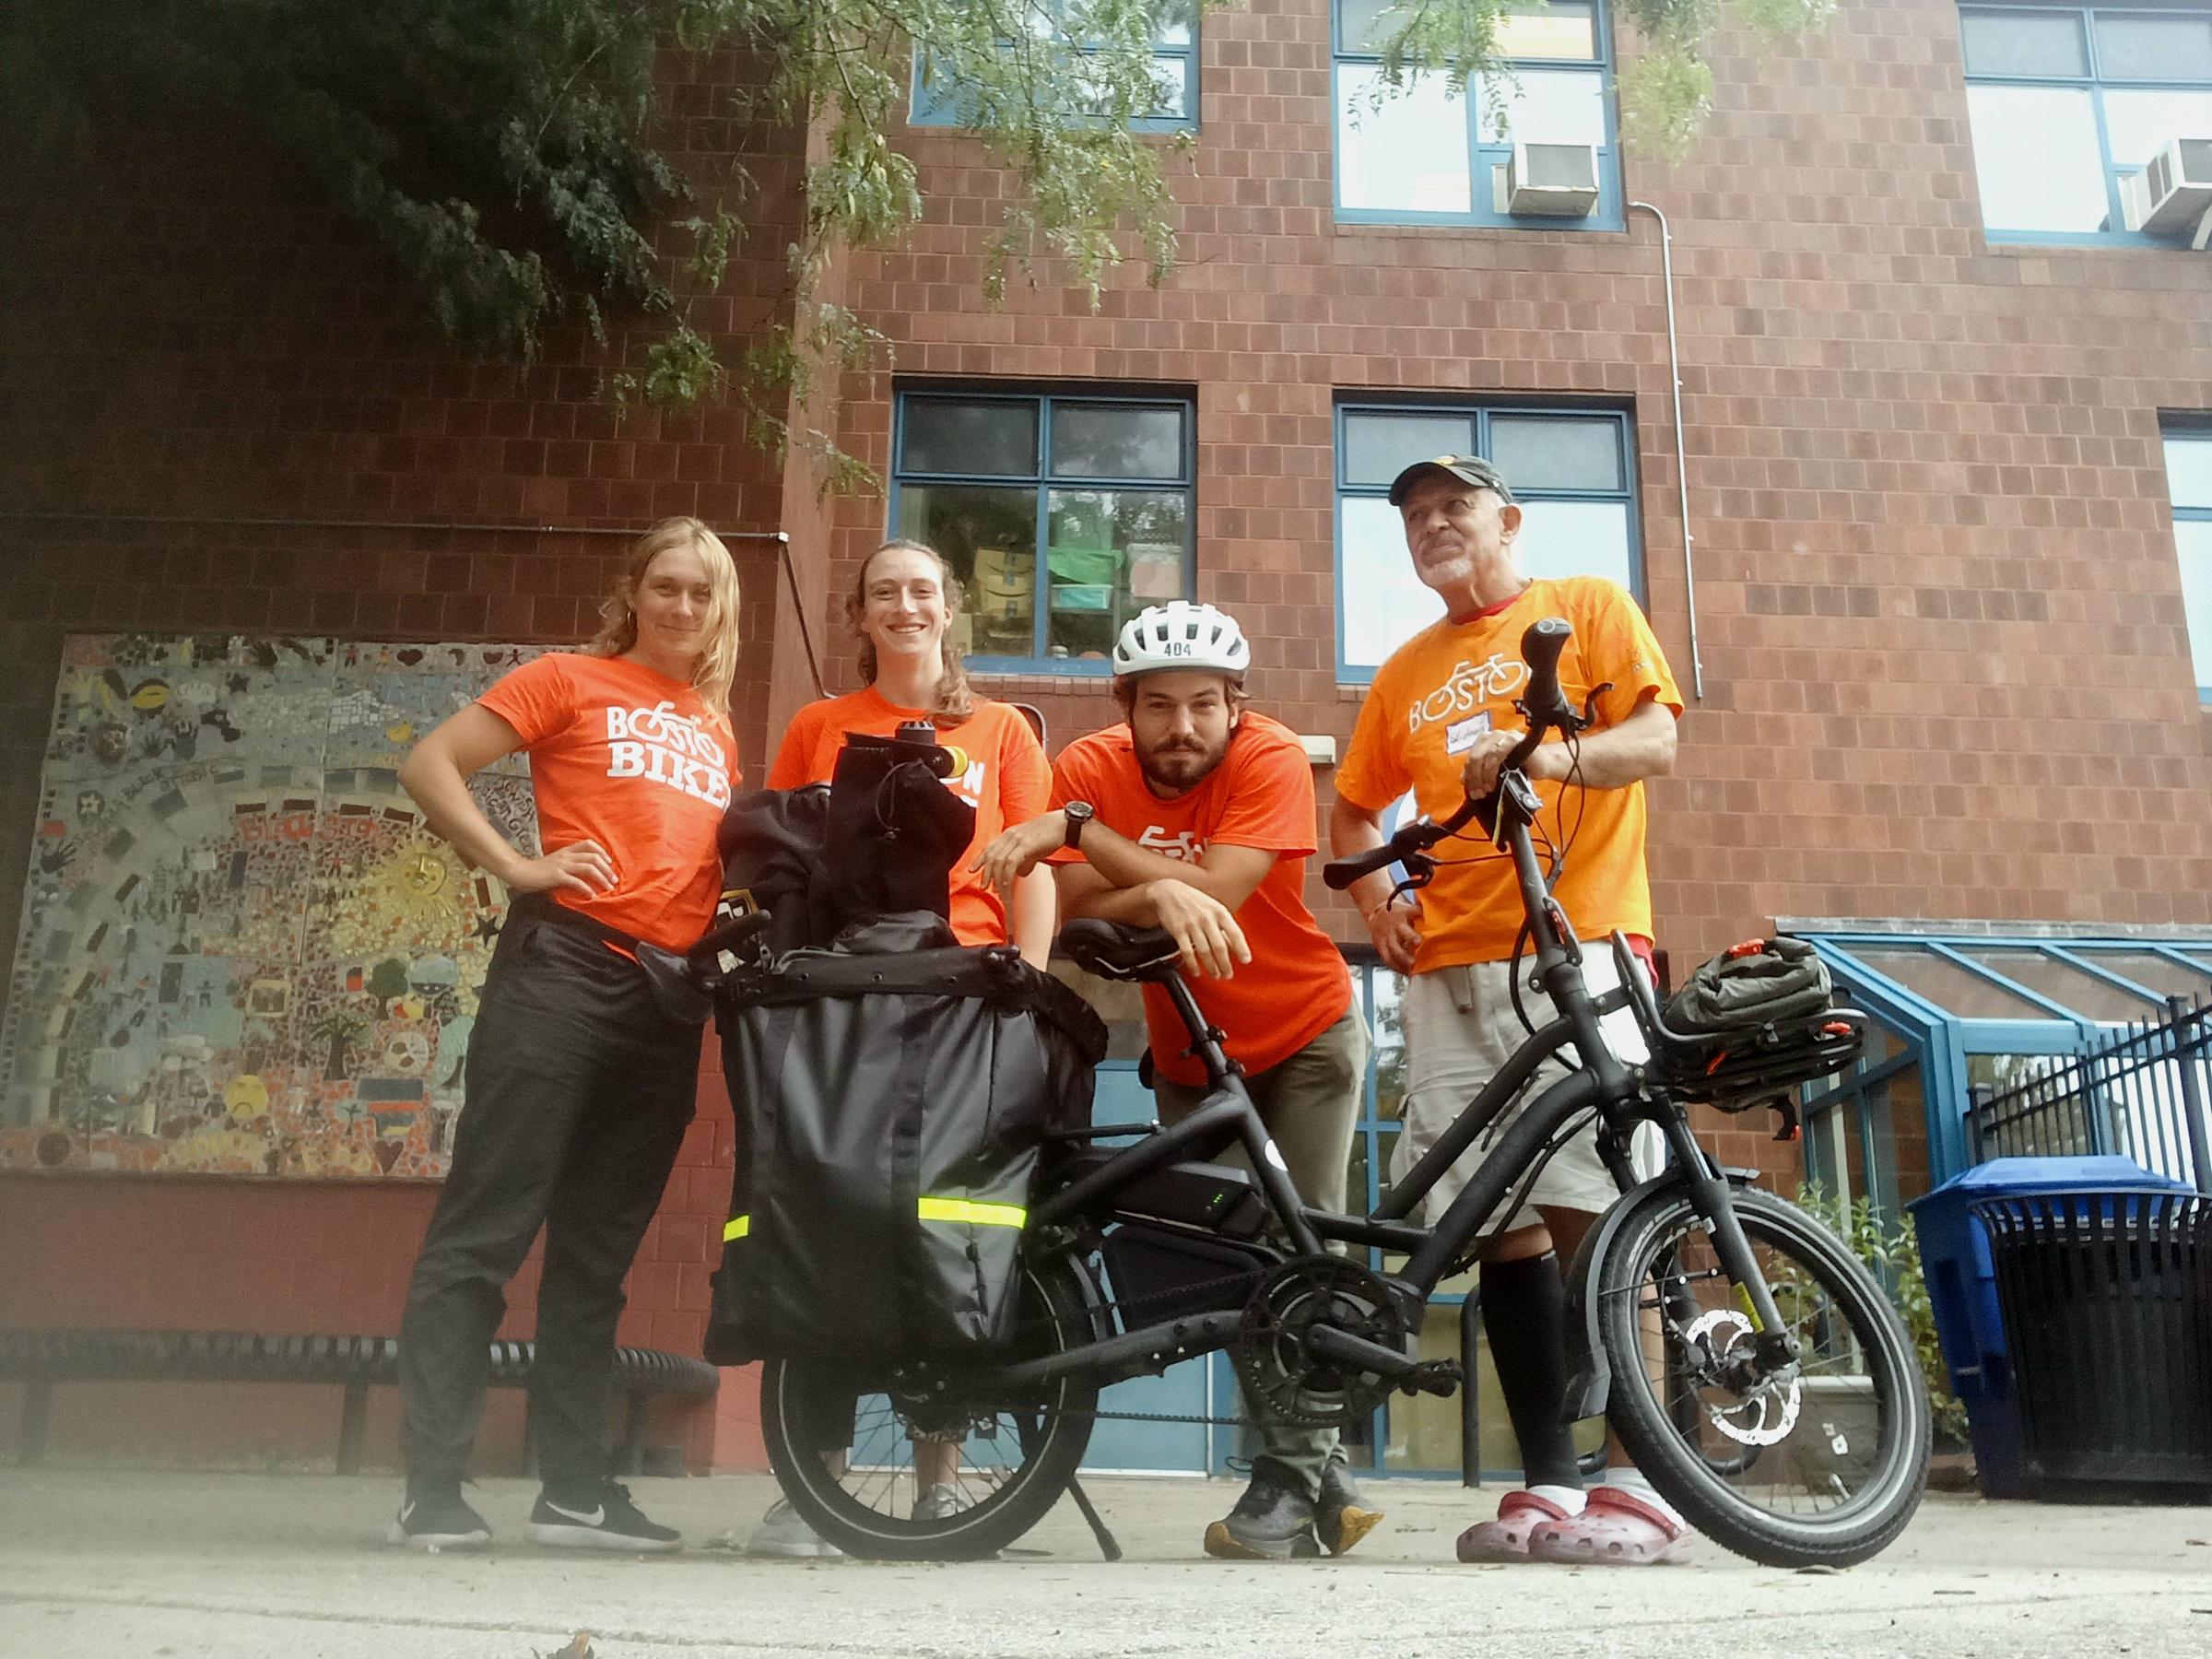 members of the Boston Bikes program posing with one of the employee e-cargo bikes